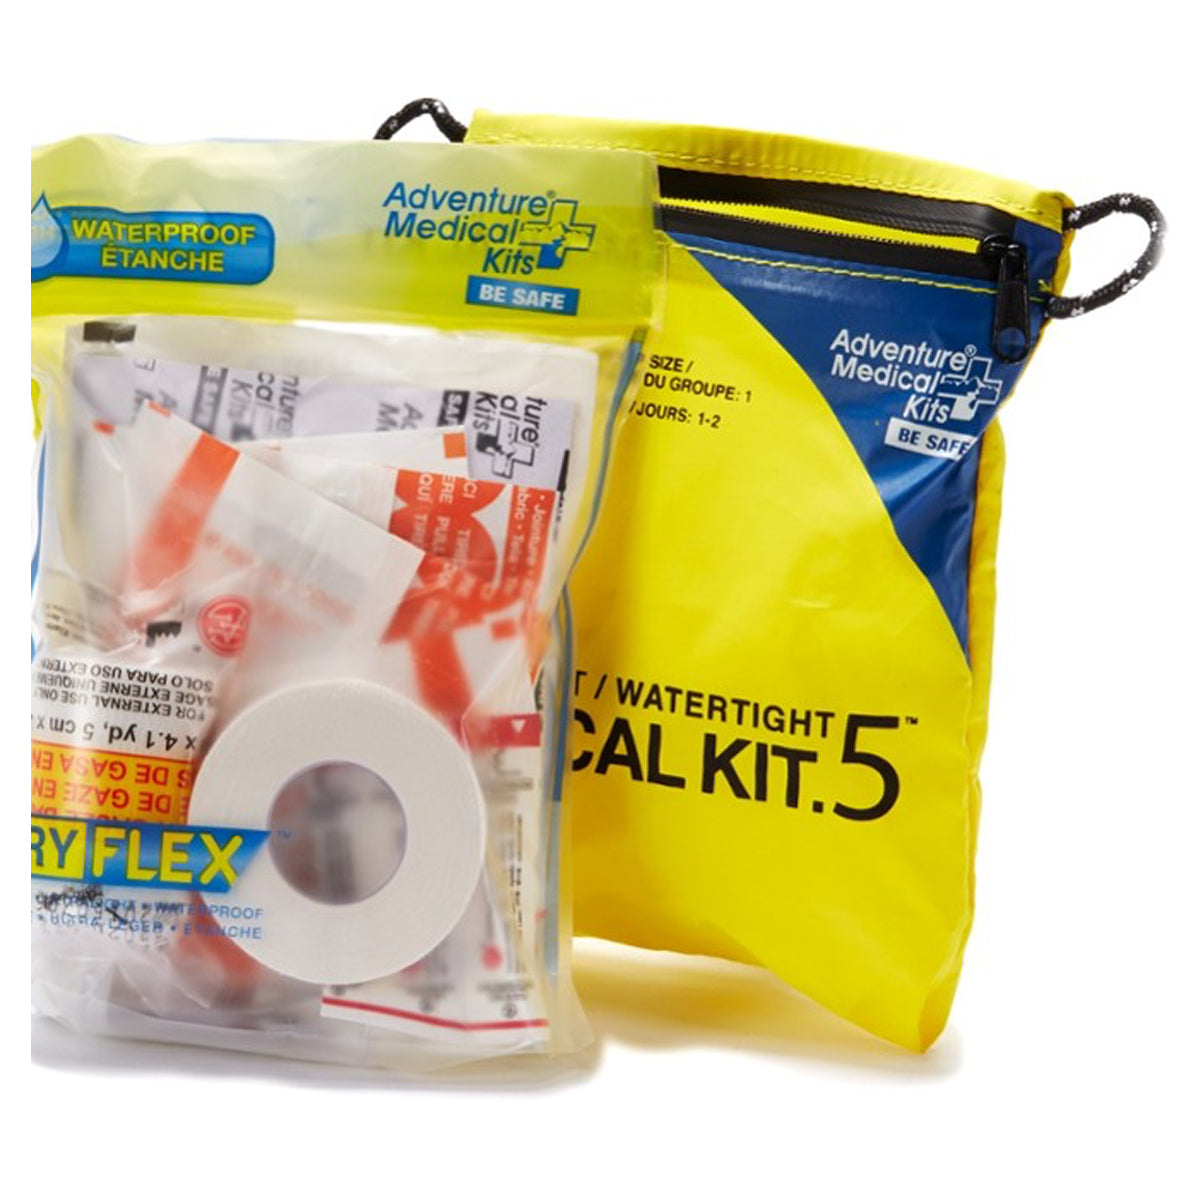 Adventure Medical Kits Ultralight/Watertight .5 Medical Kit in Adventure Medical Kits Ultralight/Watertight .5 Medical Kit by Tender Outdoor | Gear - goHUNT Shop by GOHUNT | Tender Outdoor - GOHUNT Shop